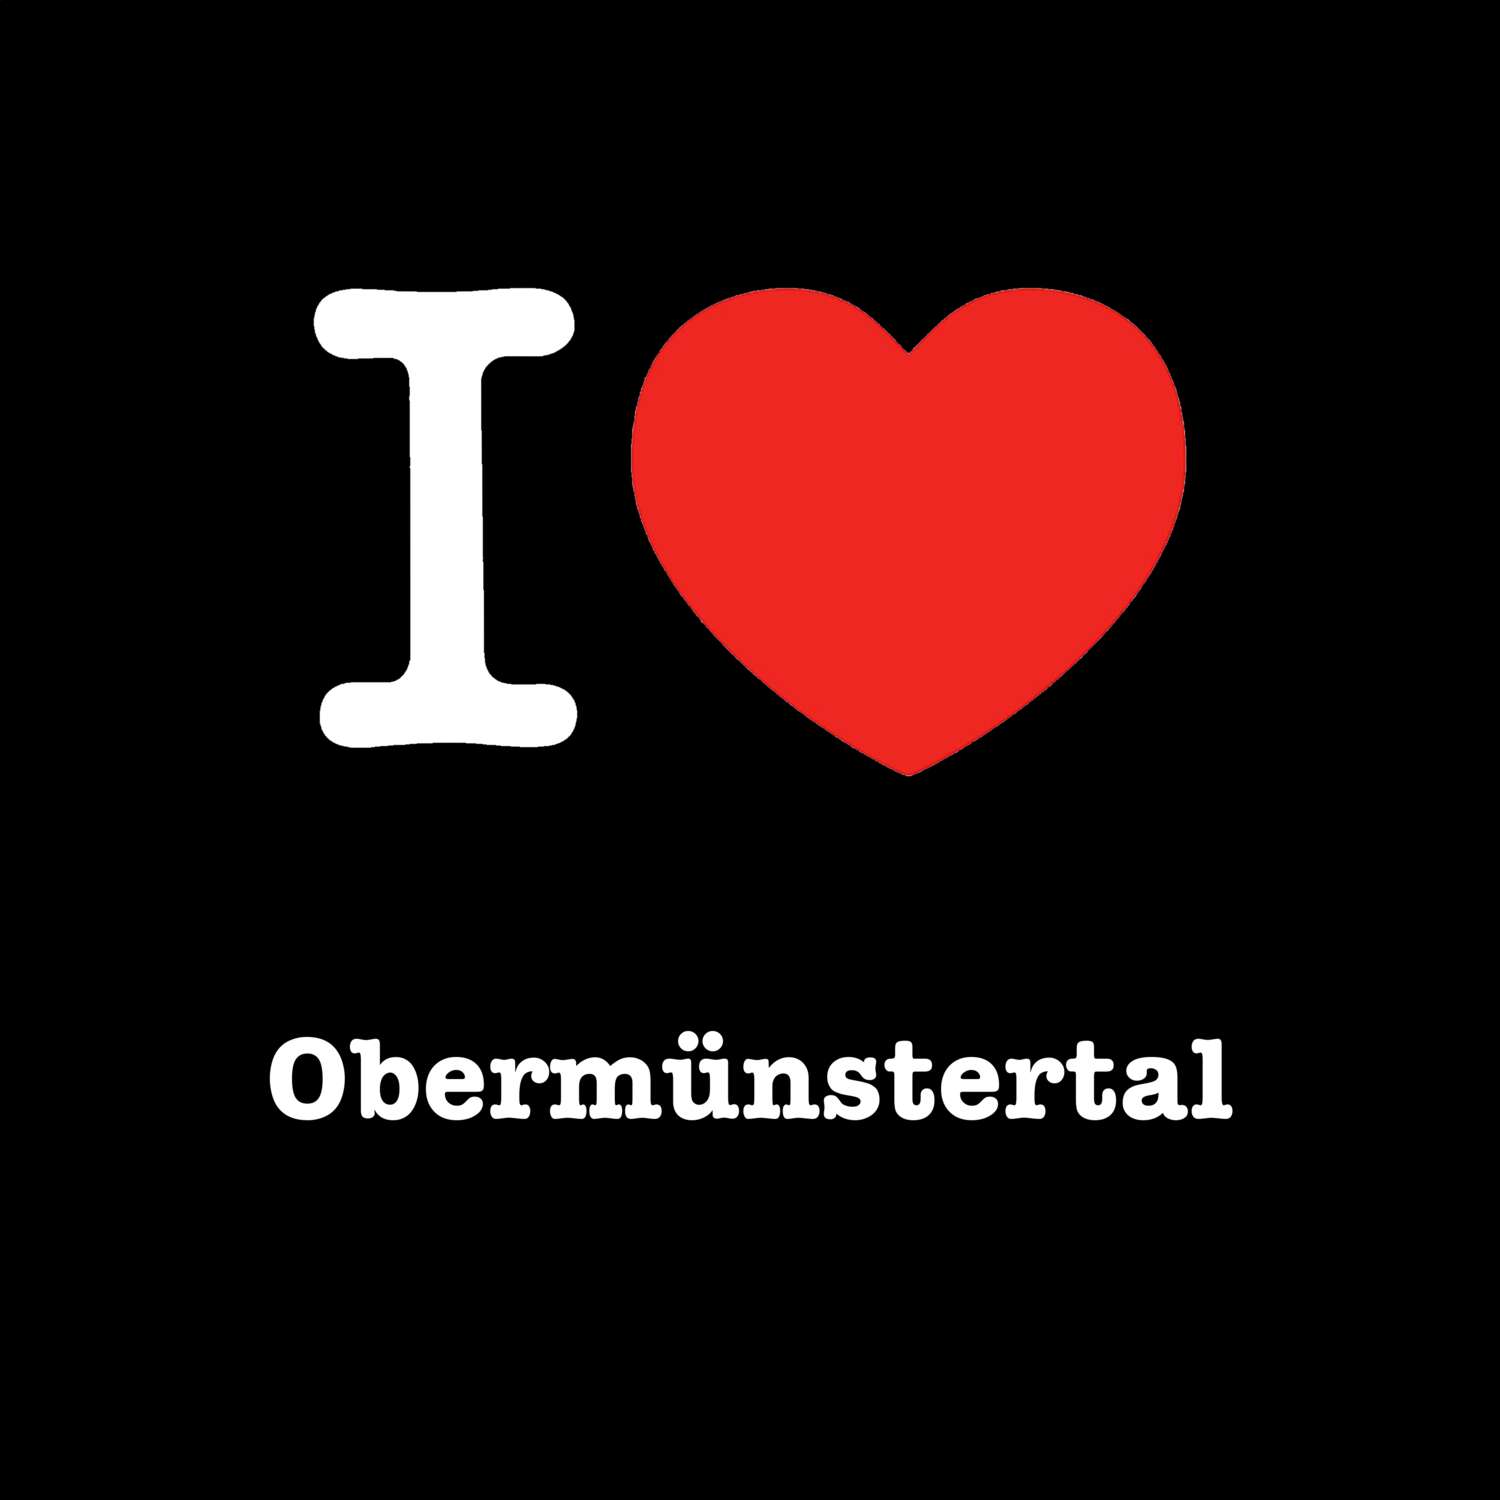 Obermünstertal T-Shirt »I love«